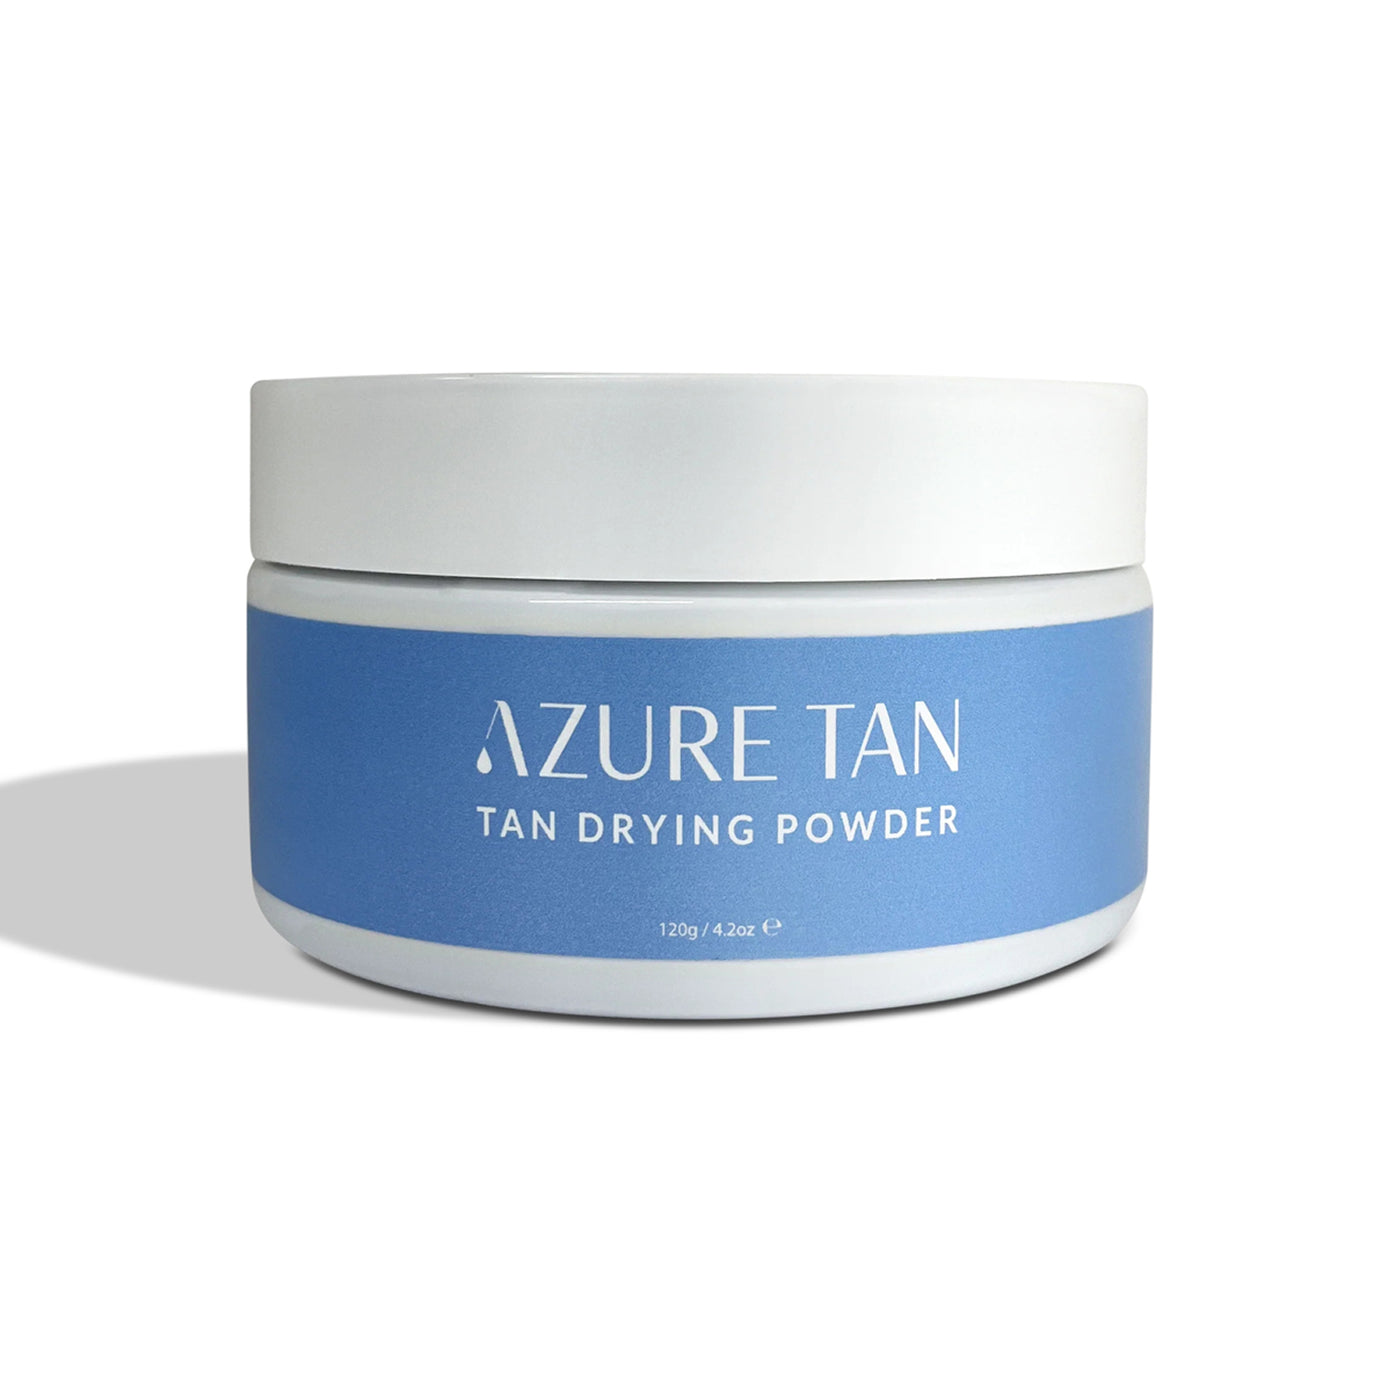 Azure Tan Self Tan Drying Powder (120g)